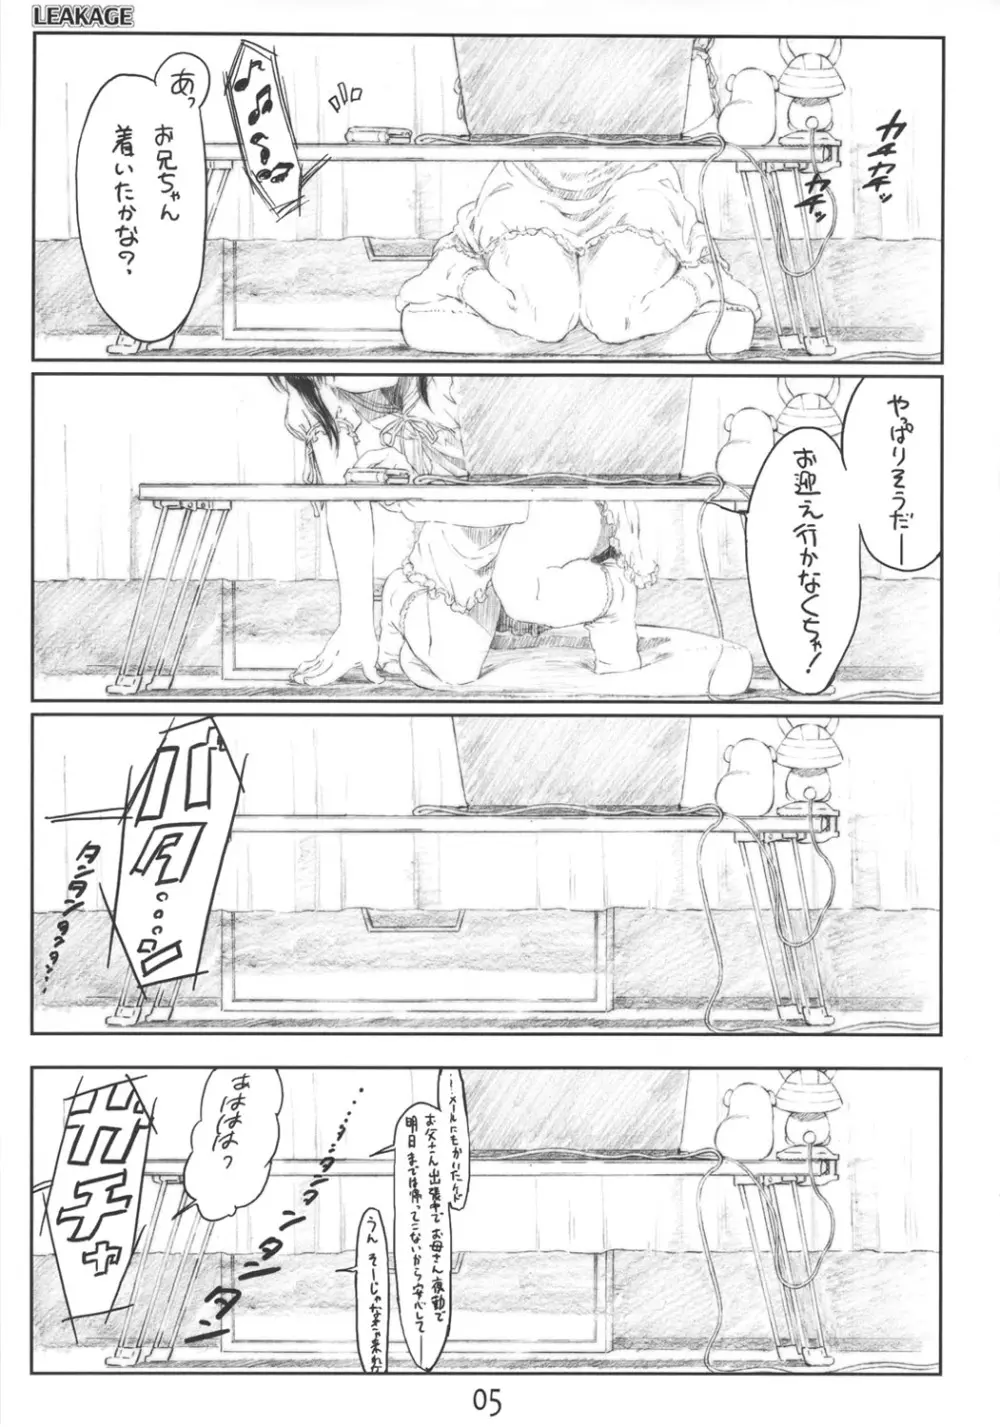 LEAKAGE りぃくえ～じ 4ページ